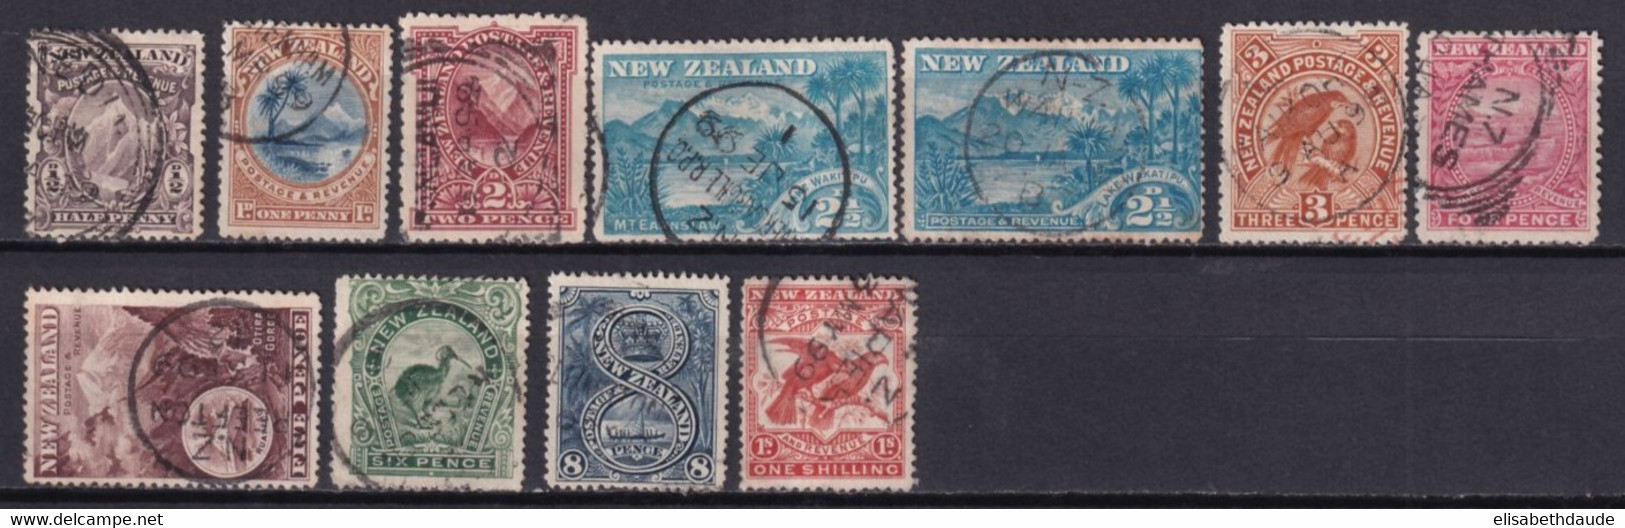 NEW ZEALAND - 1898 - YVERT N° 70/78+80 OBLITERES - COTE = 230 EUR. - - Used Stamps